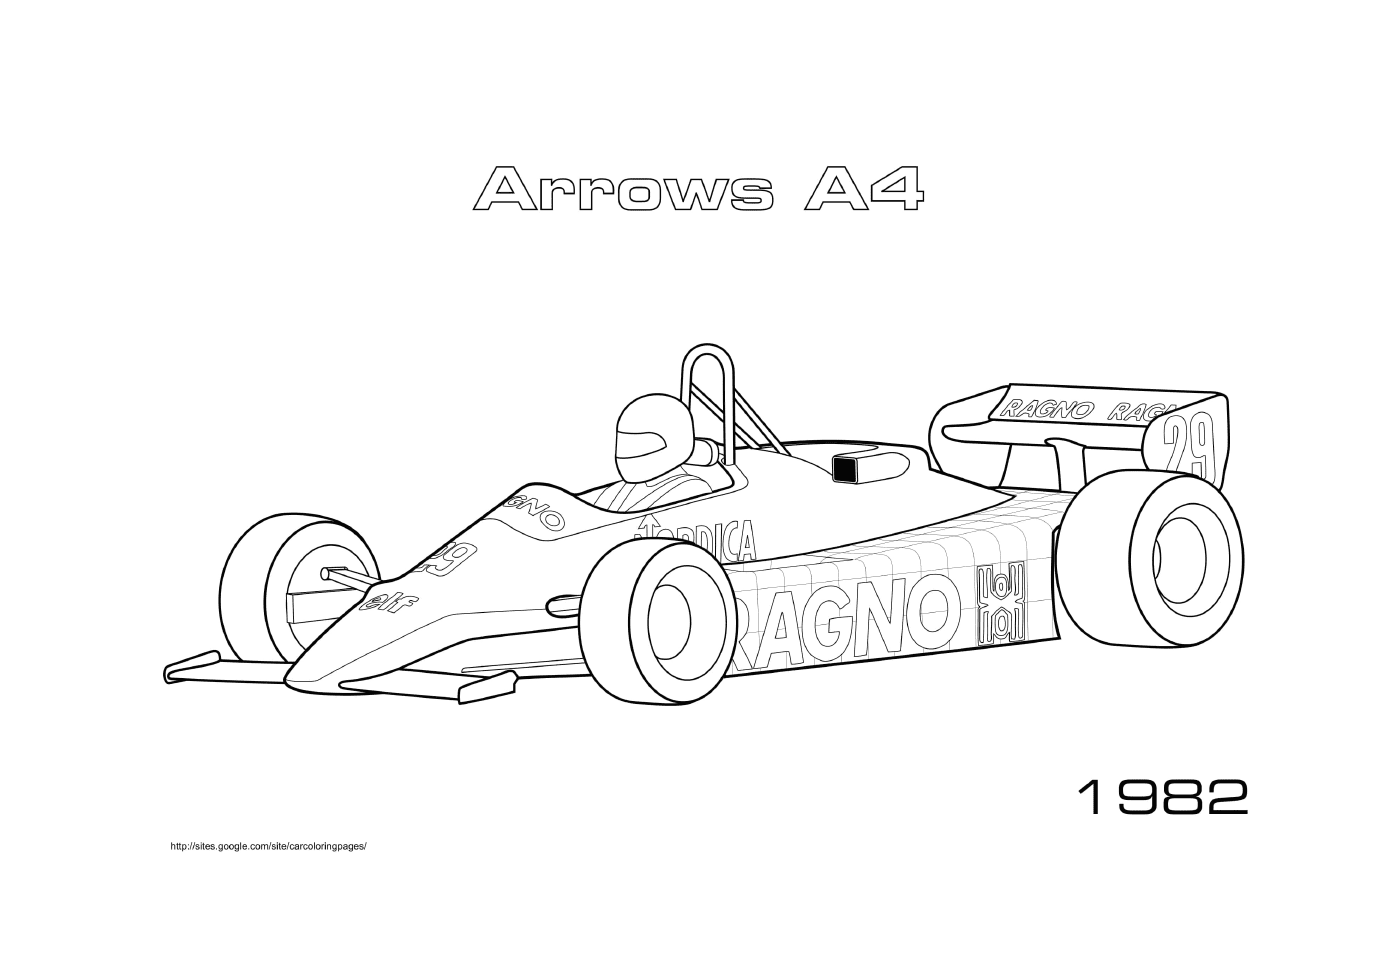  Arrow A4 1982 na pista 